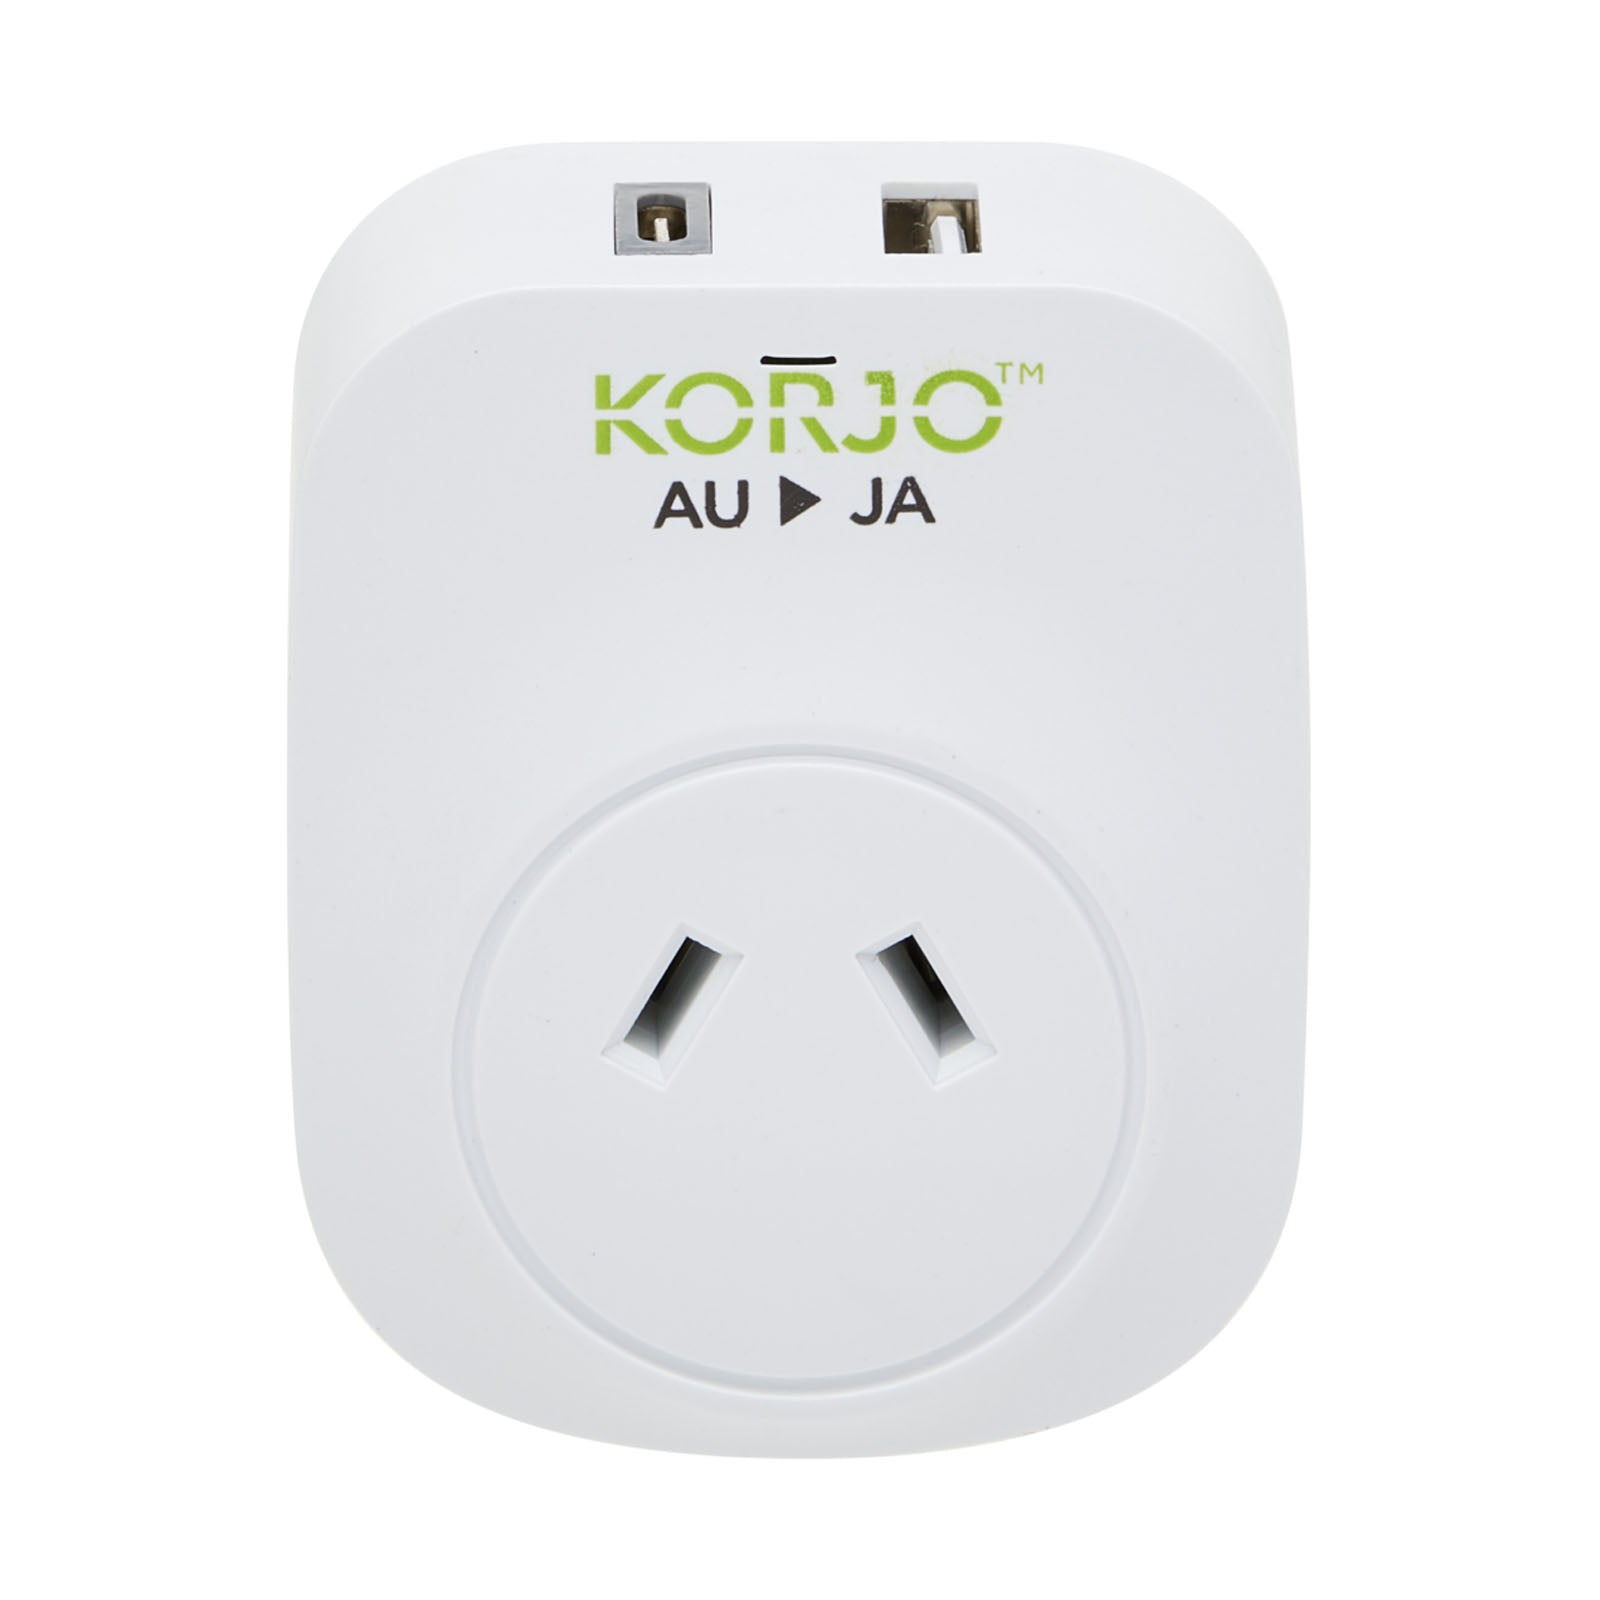 Korjo-Travel-Adaptor-Usb-Port-A-And-C-Australia-To-Japan-Socket